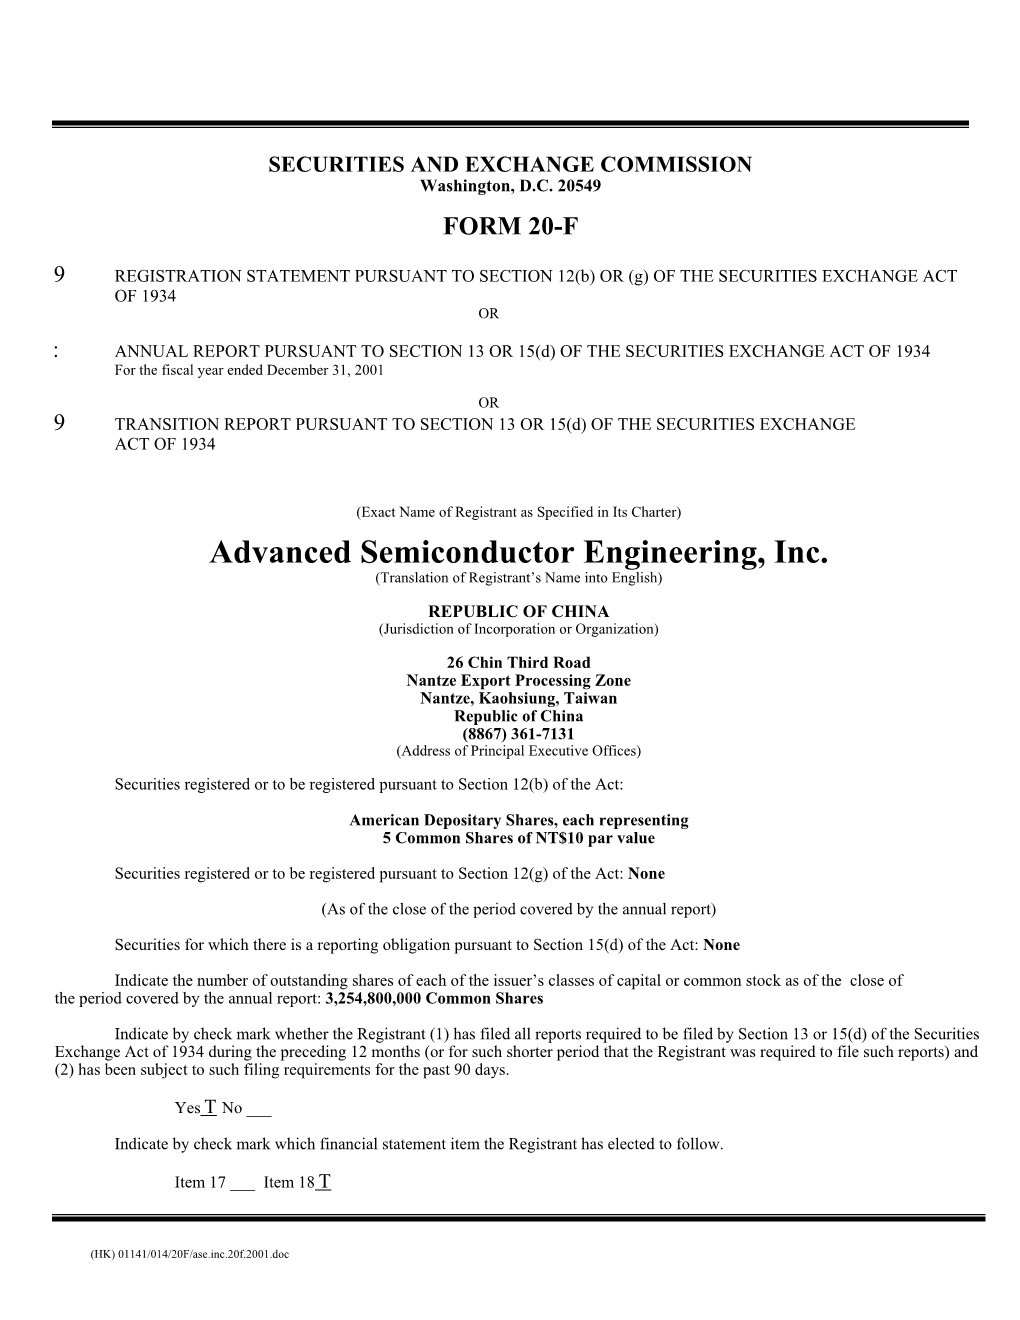 Advanced Semiconductor Engineering, Inc. (Translation of Registrant’S Name Into English)